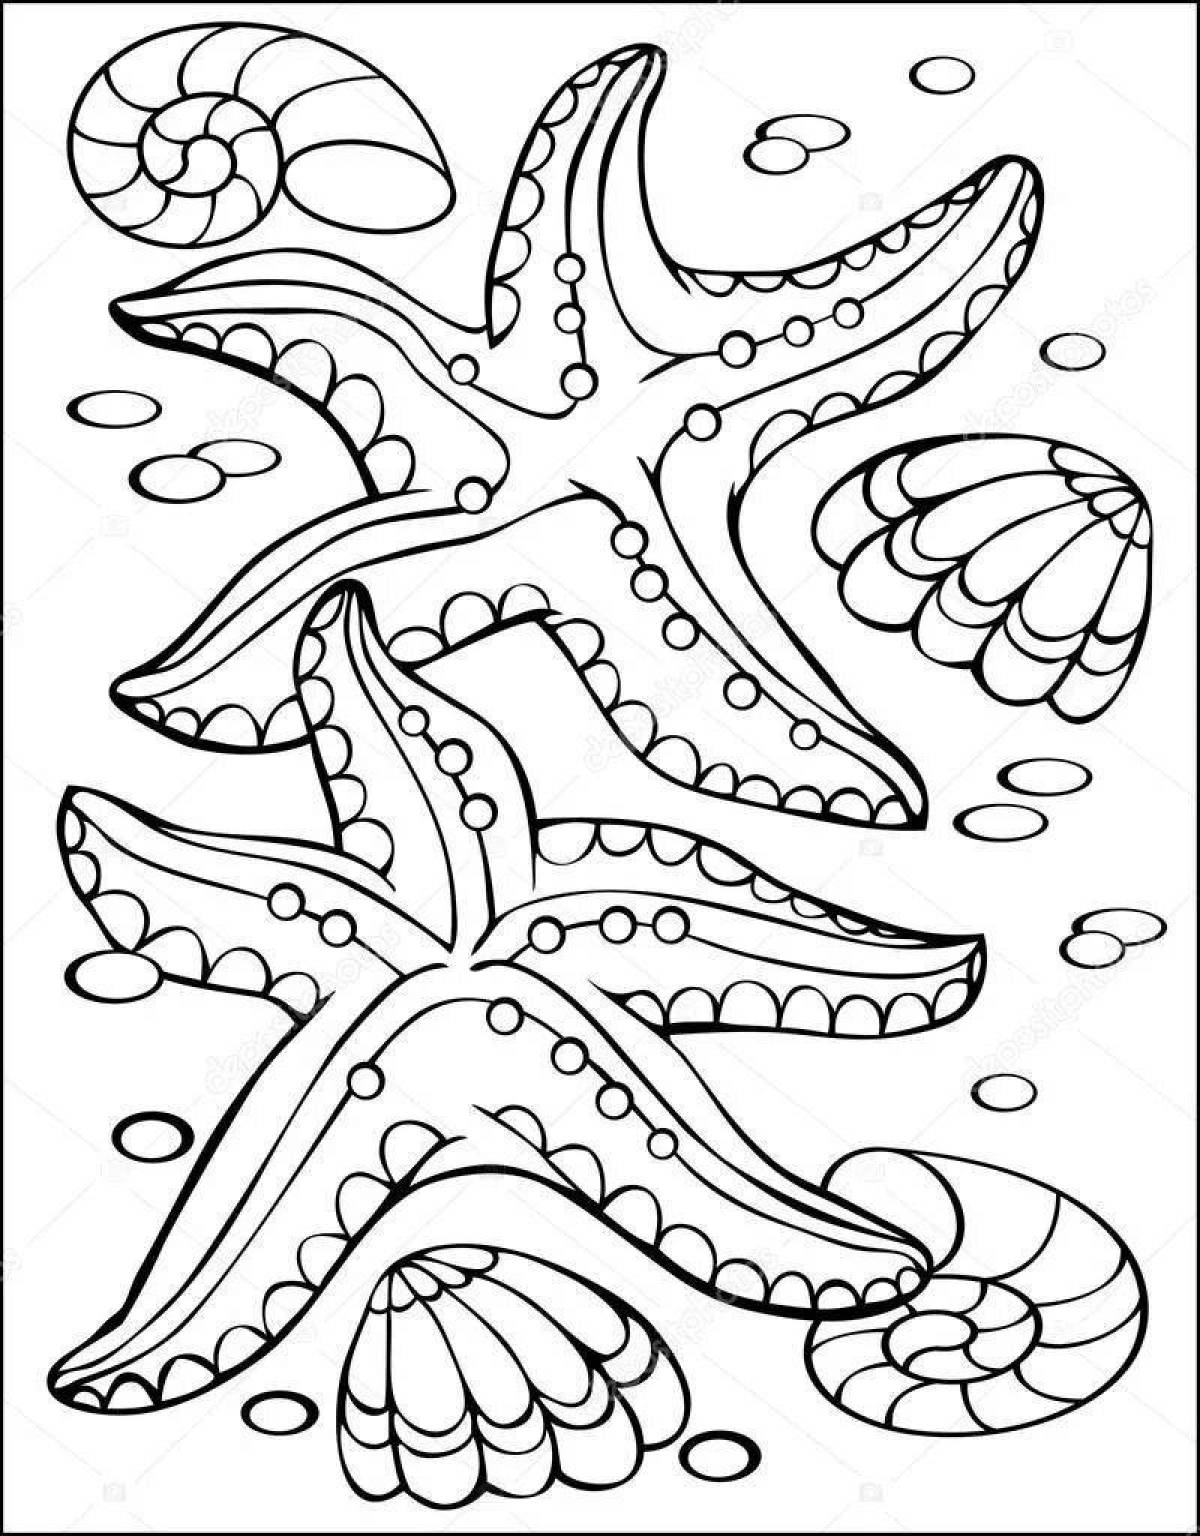 Incredible starfish coloring book for kids